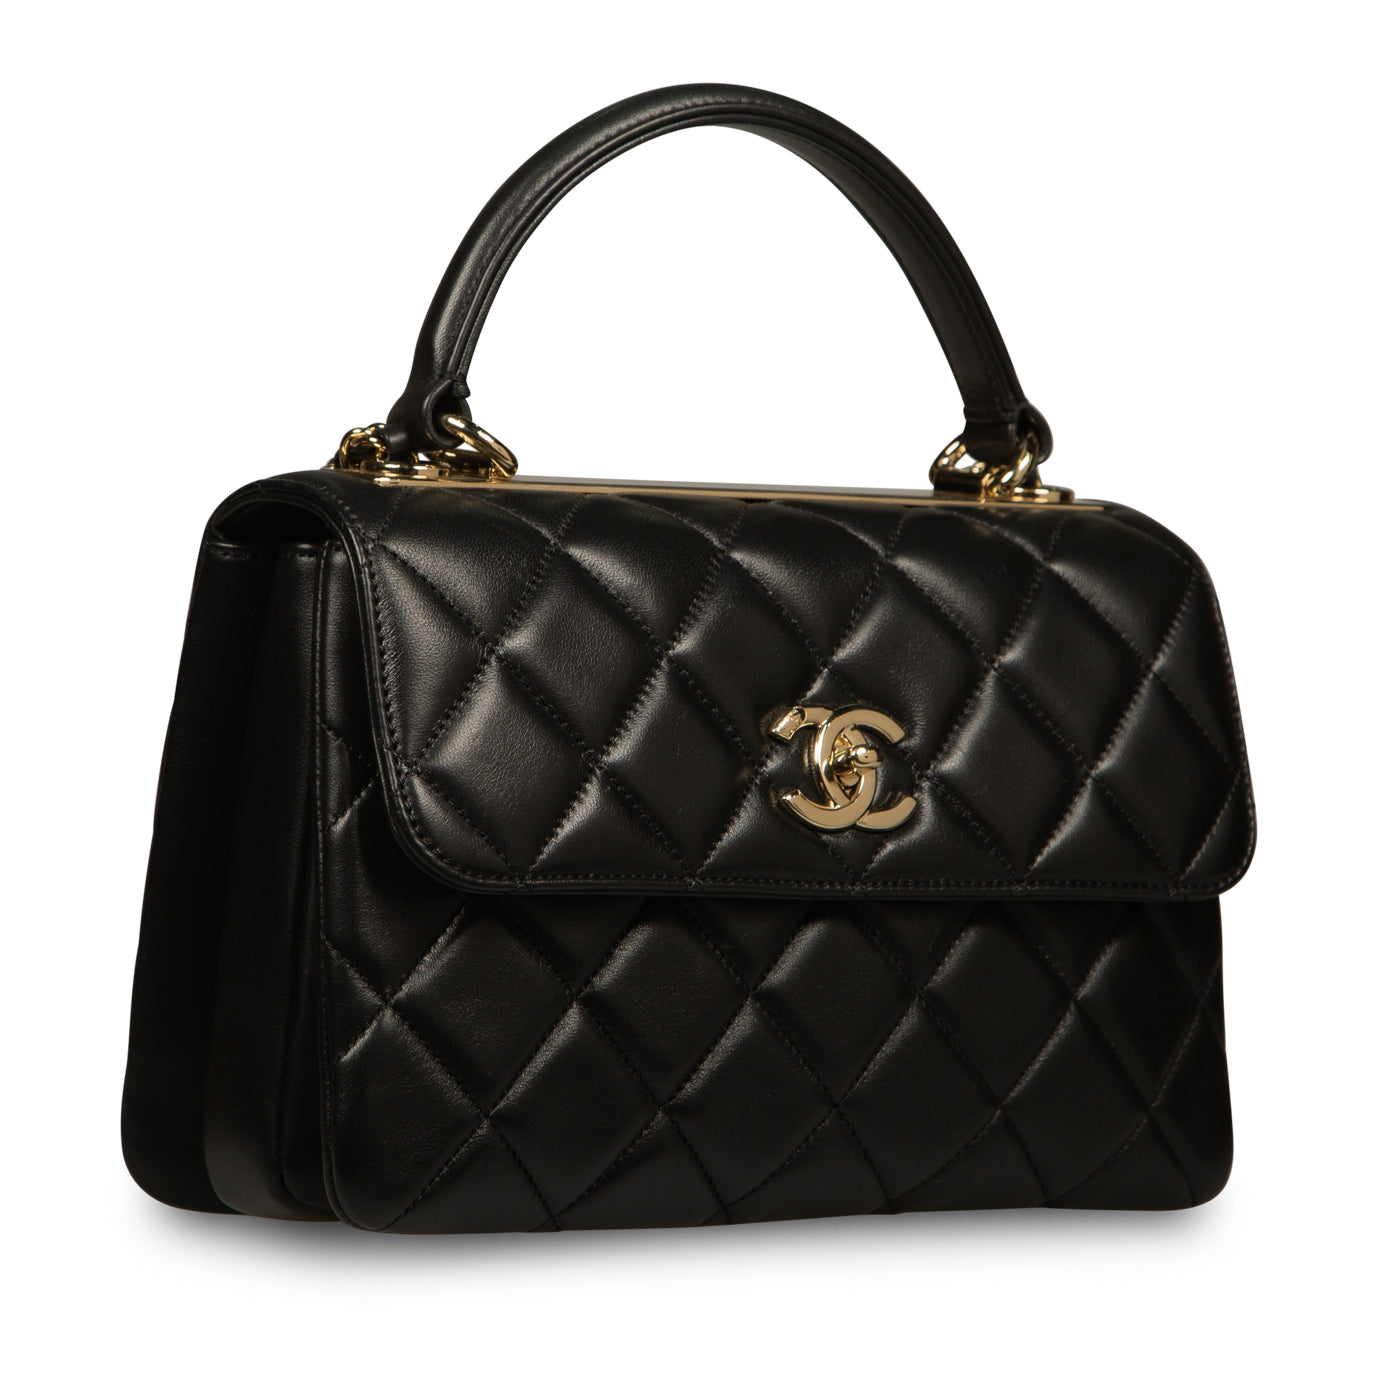 Chanel - Small Trendy CC Flap Bag - Brand New - Champagne Gold Hardware -  Black Lambskin